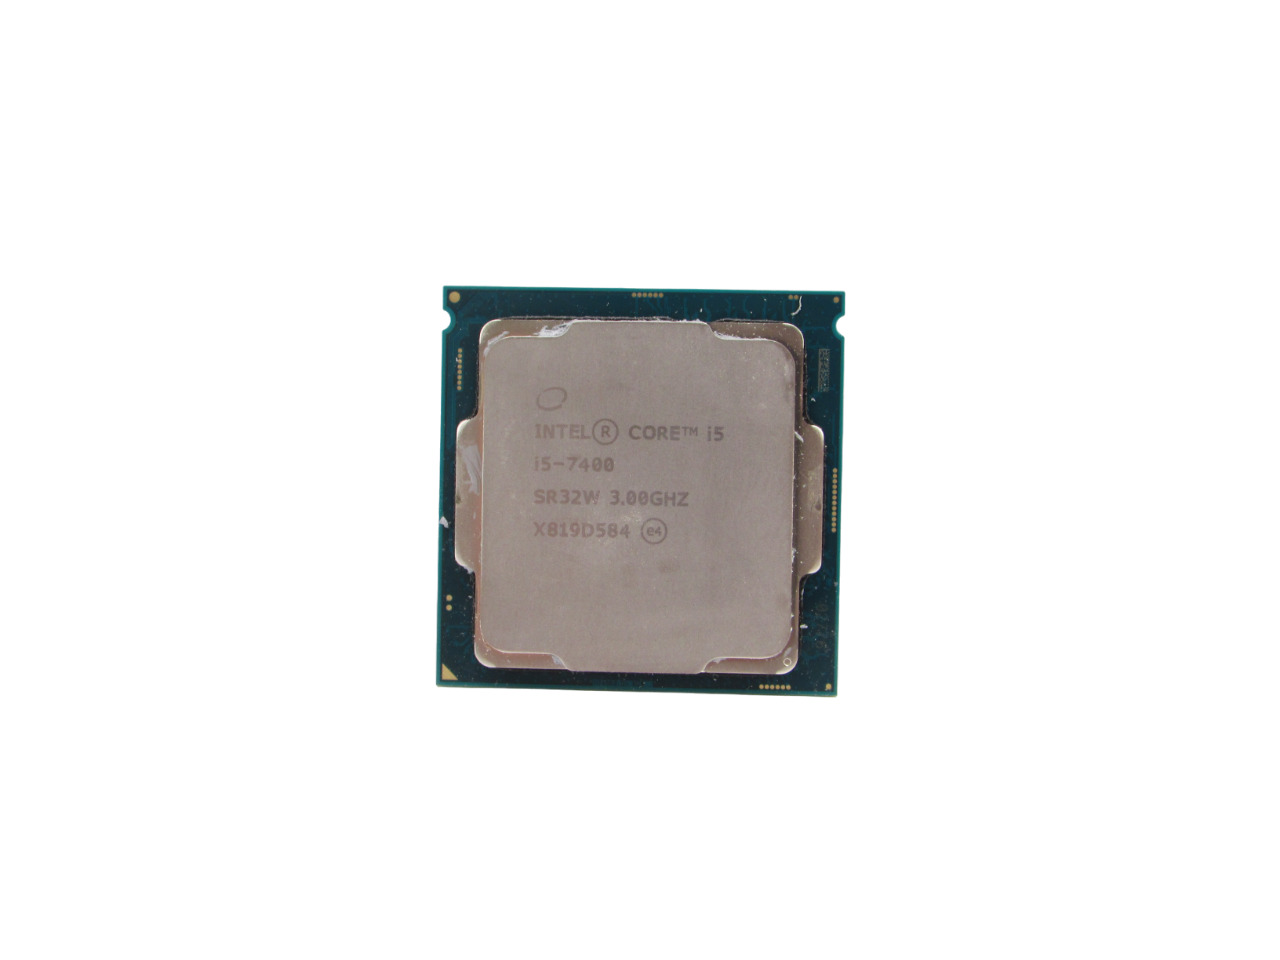 Intel Core i5-7400 SR32W 3.00 GHz Quad-Core LGA1151 6MB Cache CPU Processor